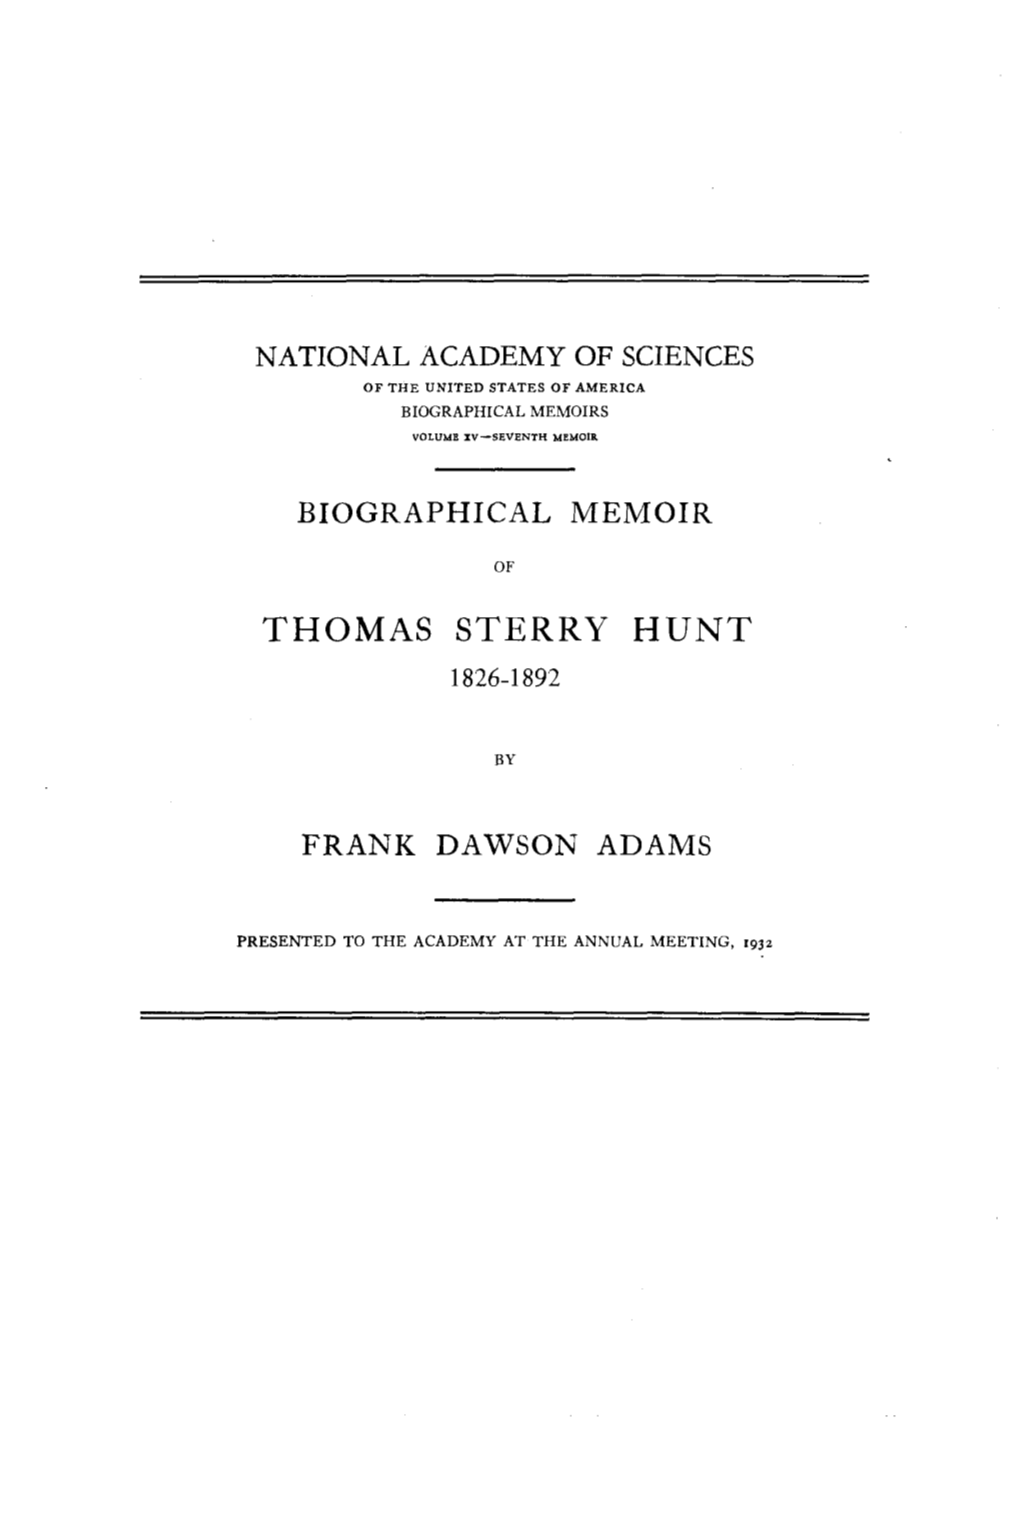 Thomas Sterry Hunt 1826-1892